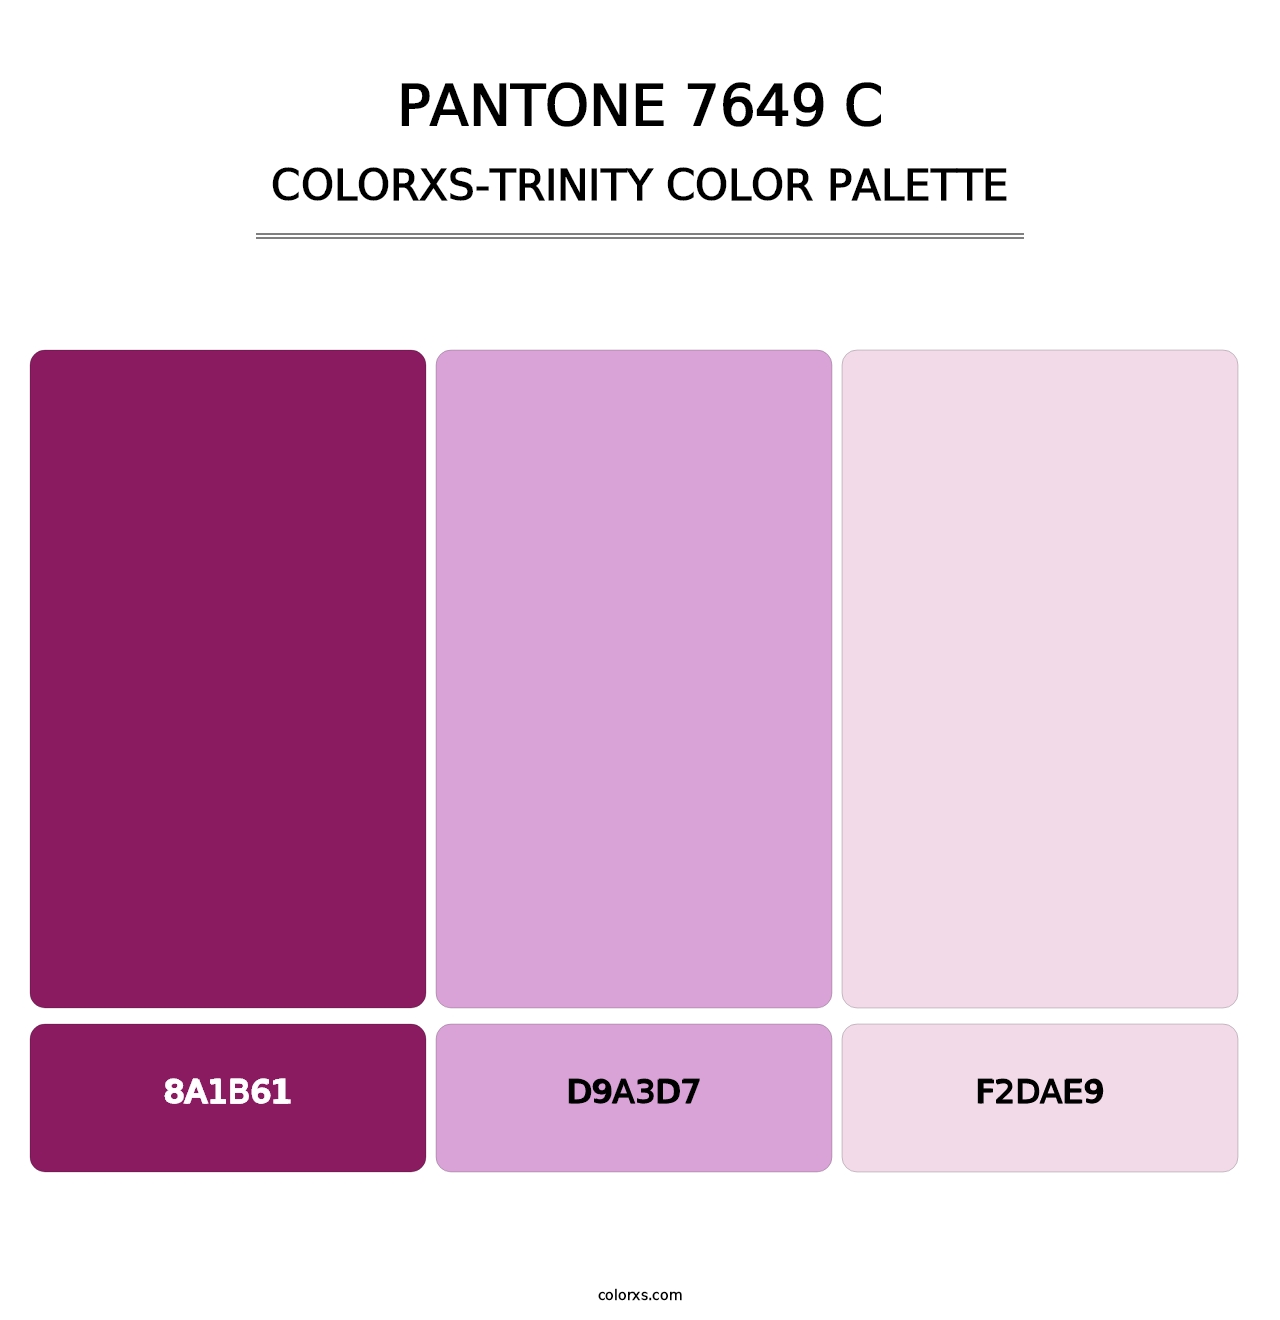 PANTONE 7649 C - Colorxs Trinity Palette